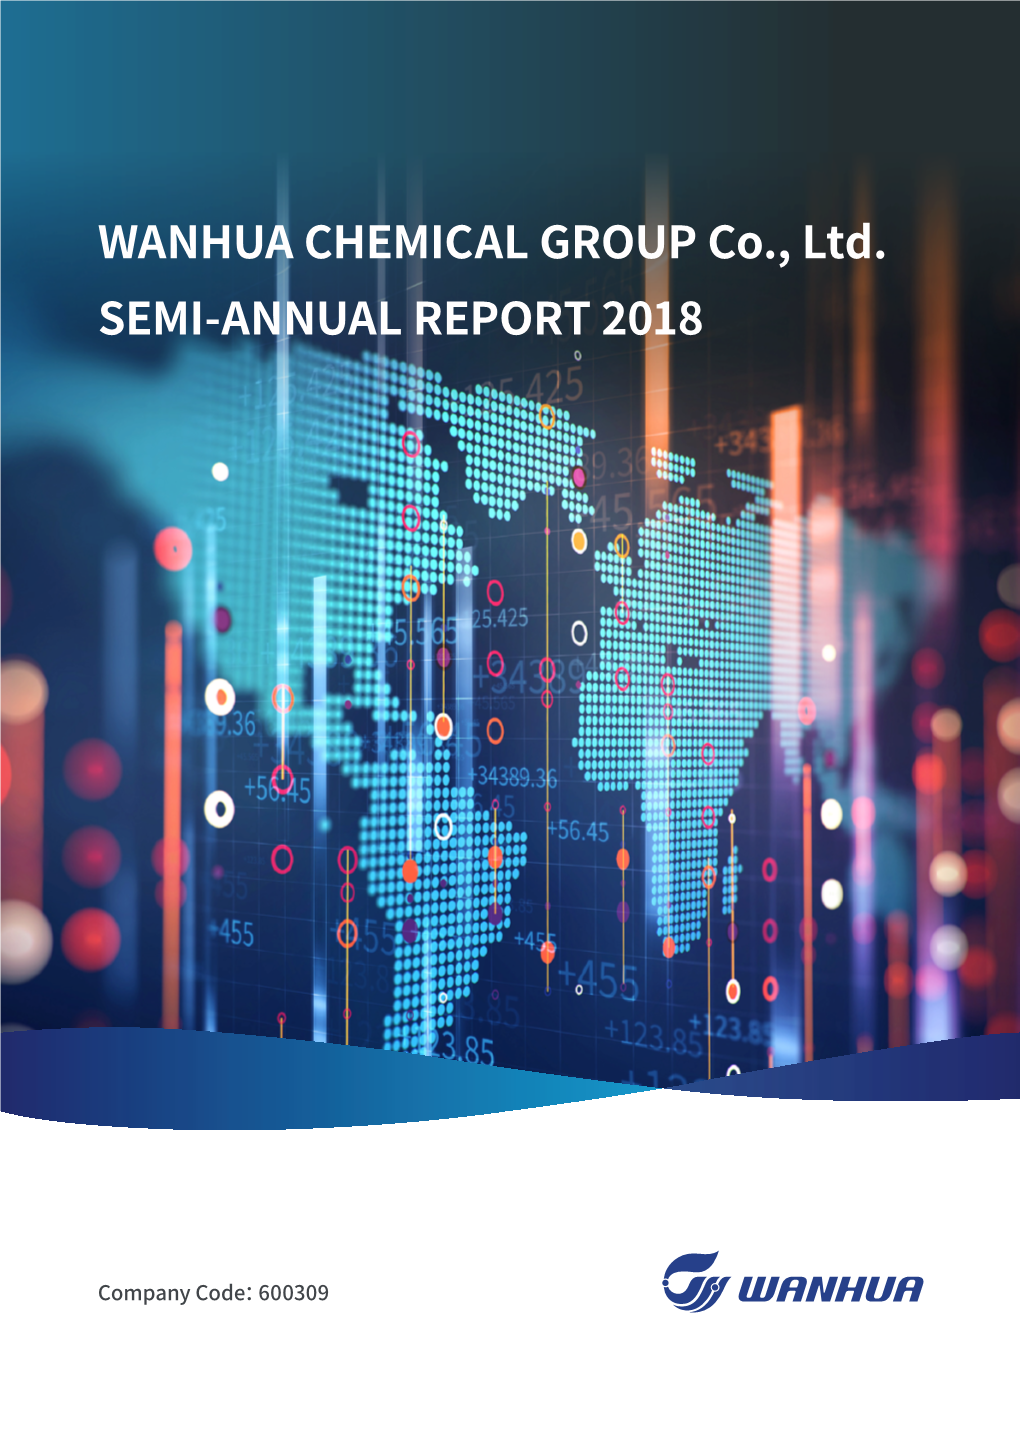 WANHUA CHEMICAL GROUP Co., Ltd. SEMI-ANNUAL REPORT 2018